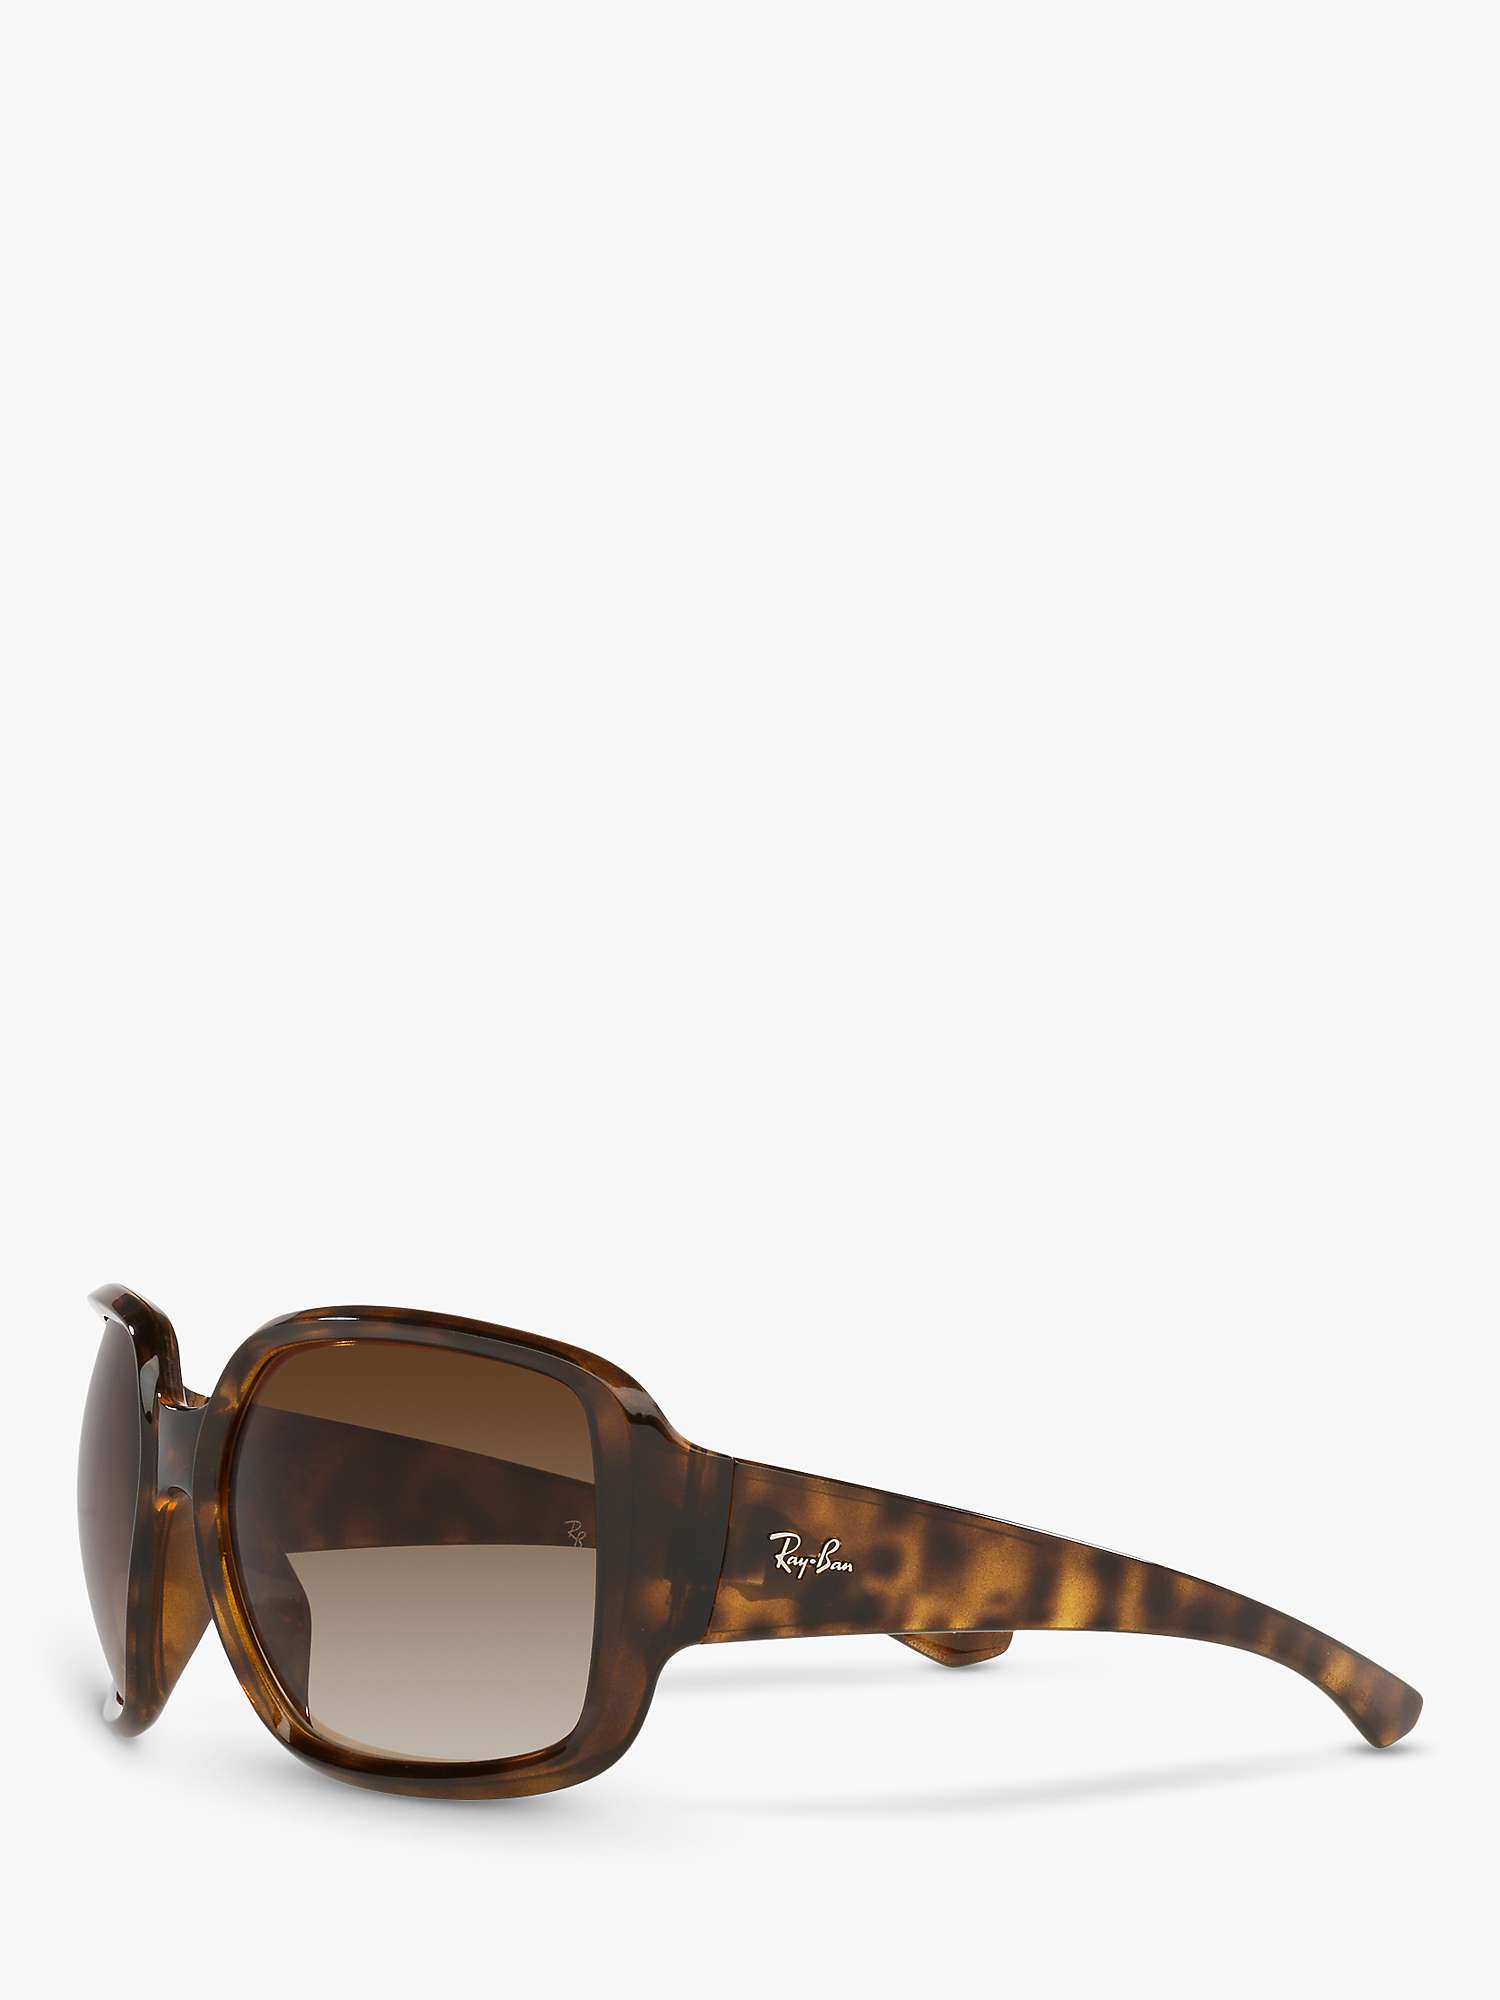 Buy Ray-Ban RB4347 Unisex Tortoiseshell Square Sunglasses, Havana/Brown Gradient Online at johnlewis.com